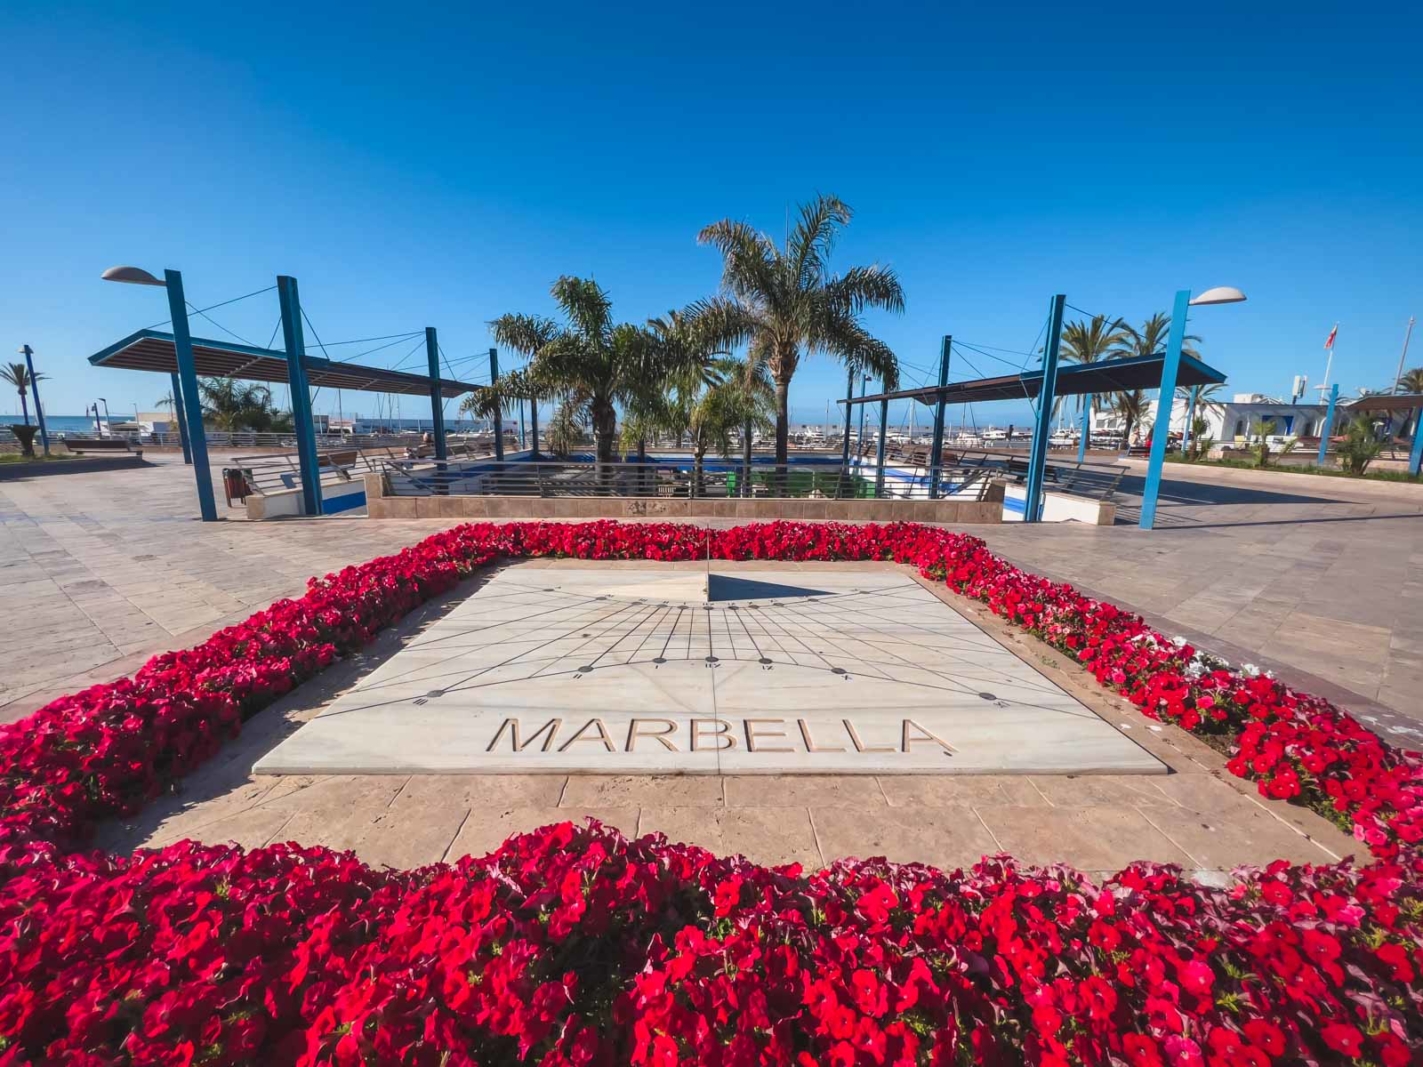 Best things to do in Marbella Spain